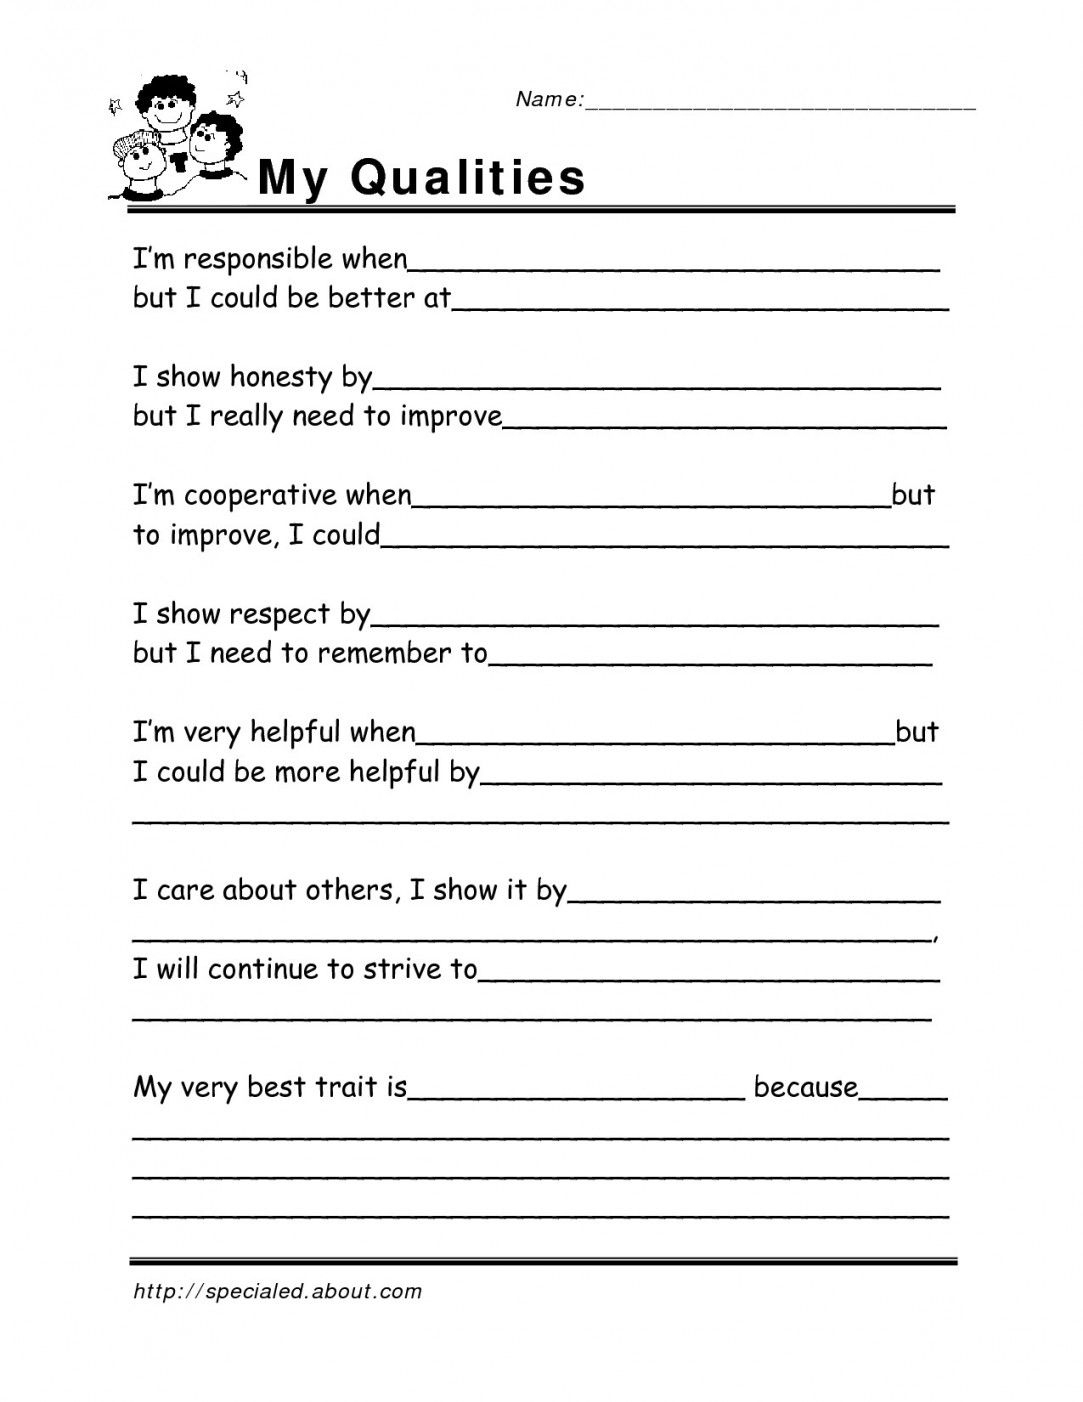 Free Printable Life Skills Worksheets For Adults | Lostranquillos | Printable Worksheets For Adults